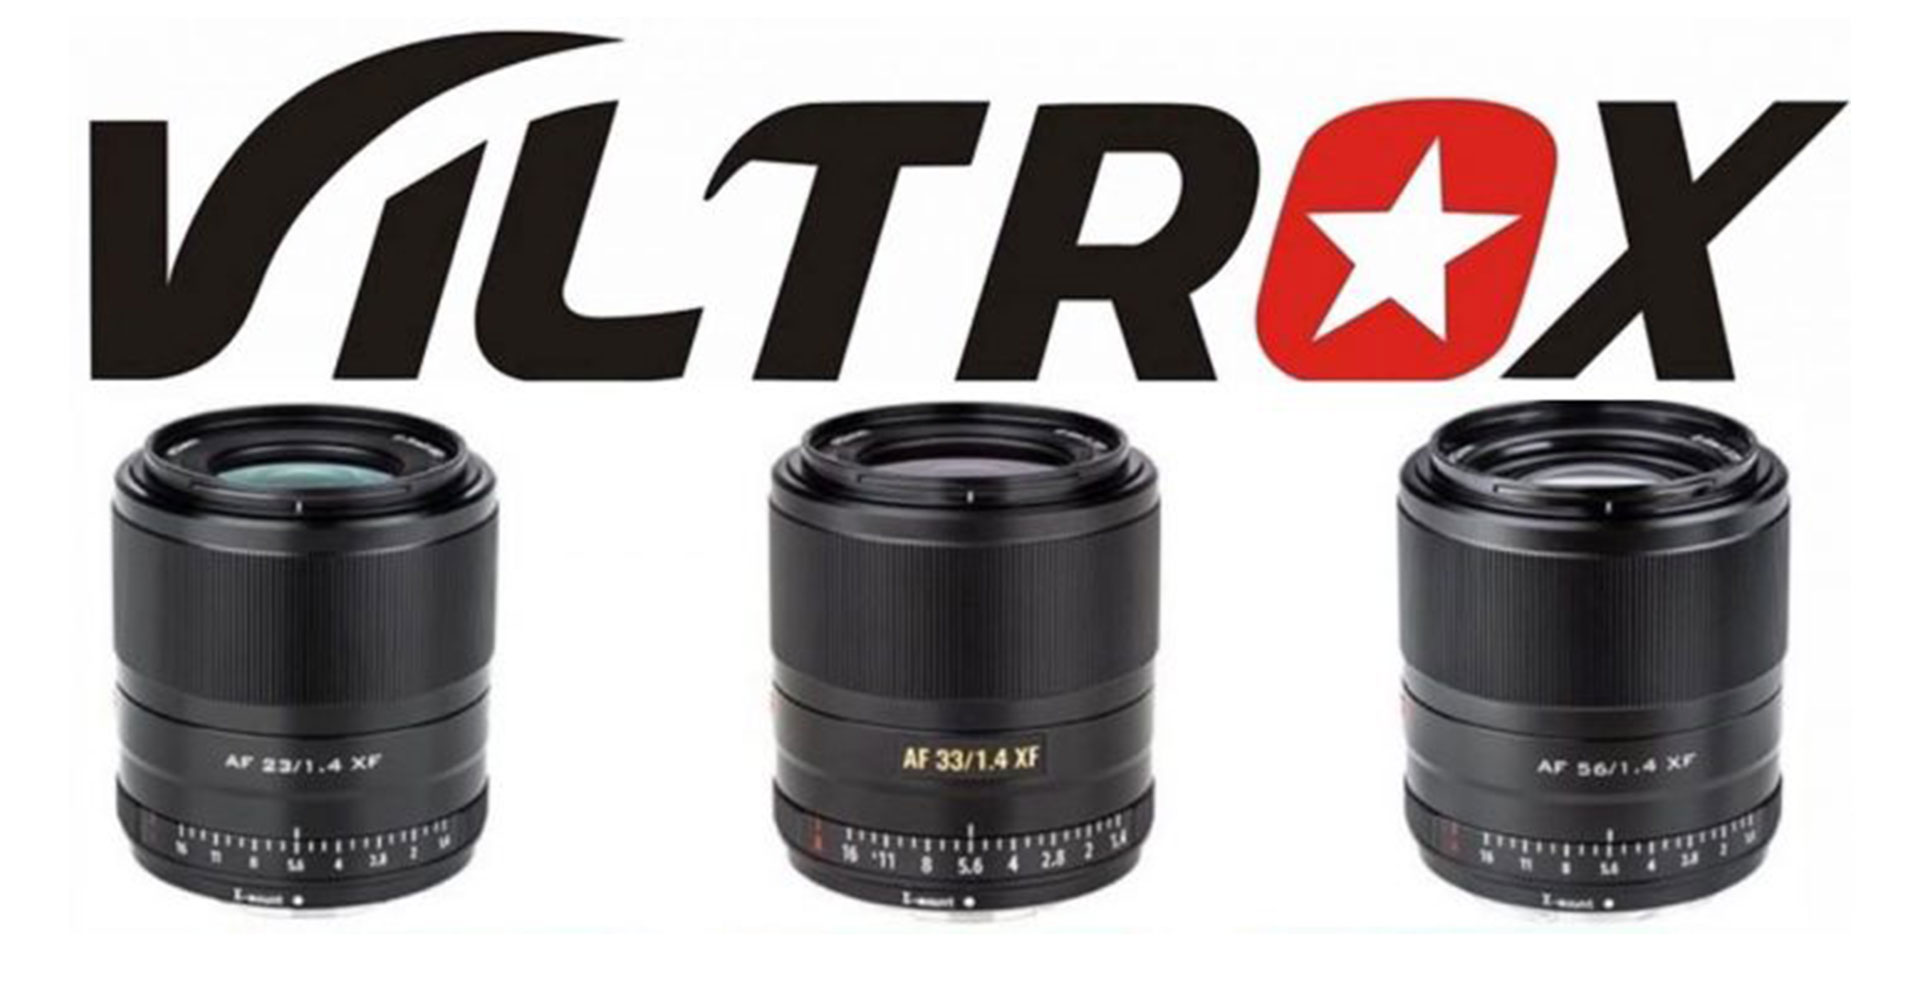 Viltrox ปล่อยเฟิร์มแวร์ใหม่ สำหรับเลนส์ 23mm F/1.4, 33mm F/1.4 และ 56mm F/1.4 เมาท์ Fujifilm XF